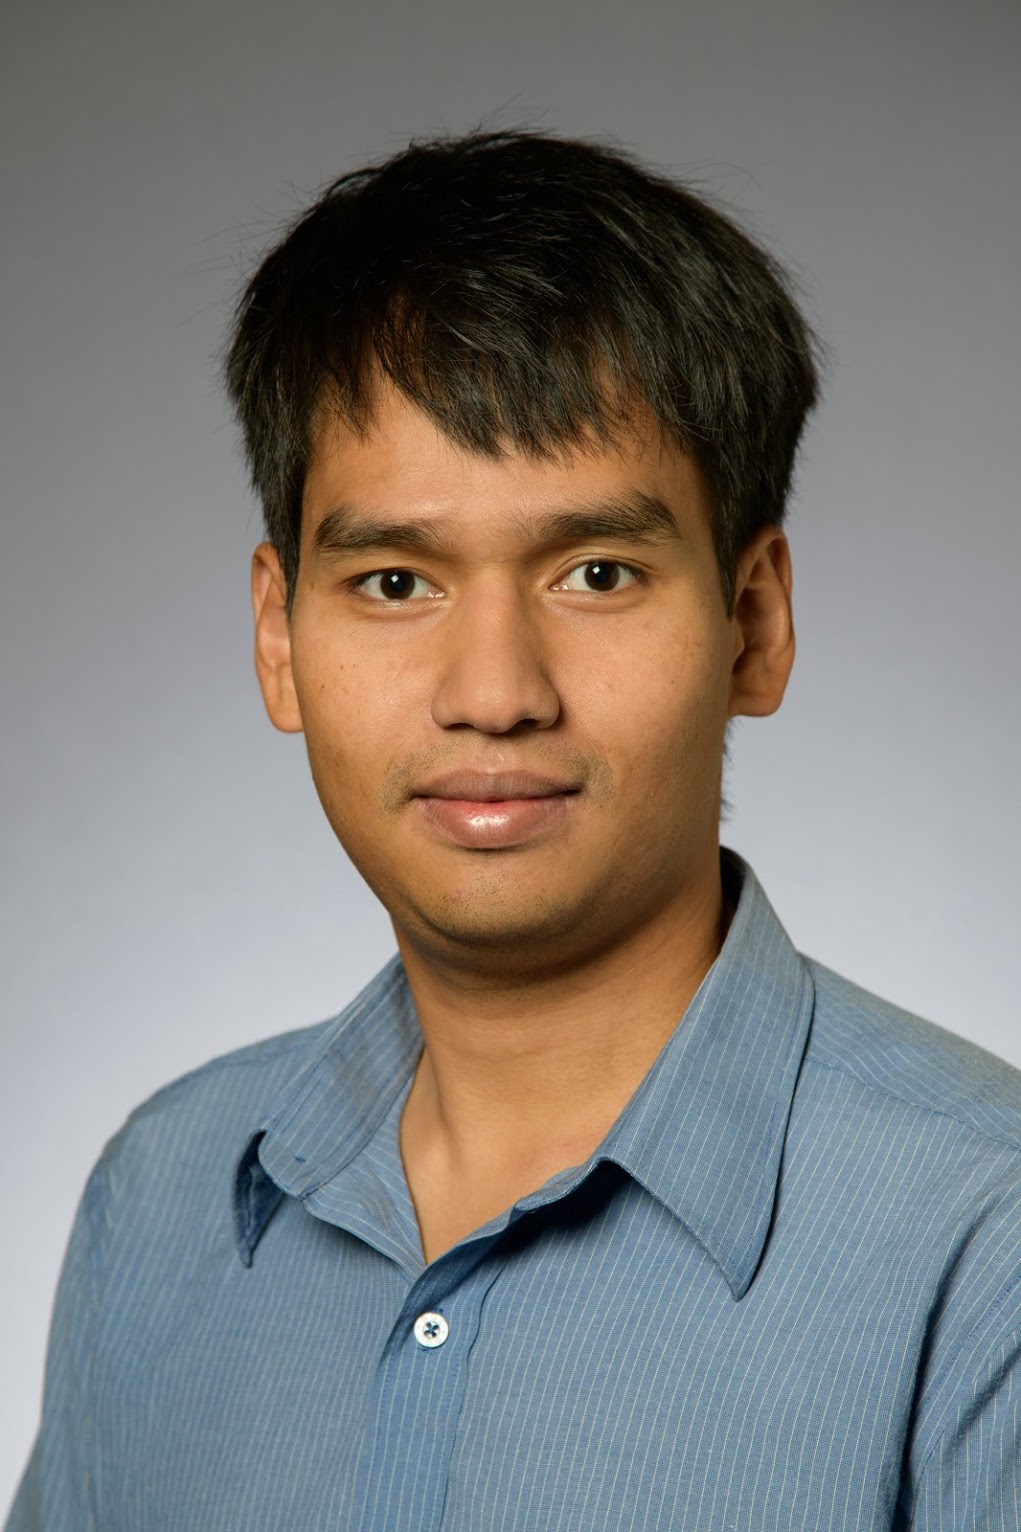 Hoang Nguyen Hung Van | Computer Science